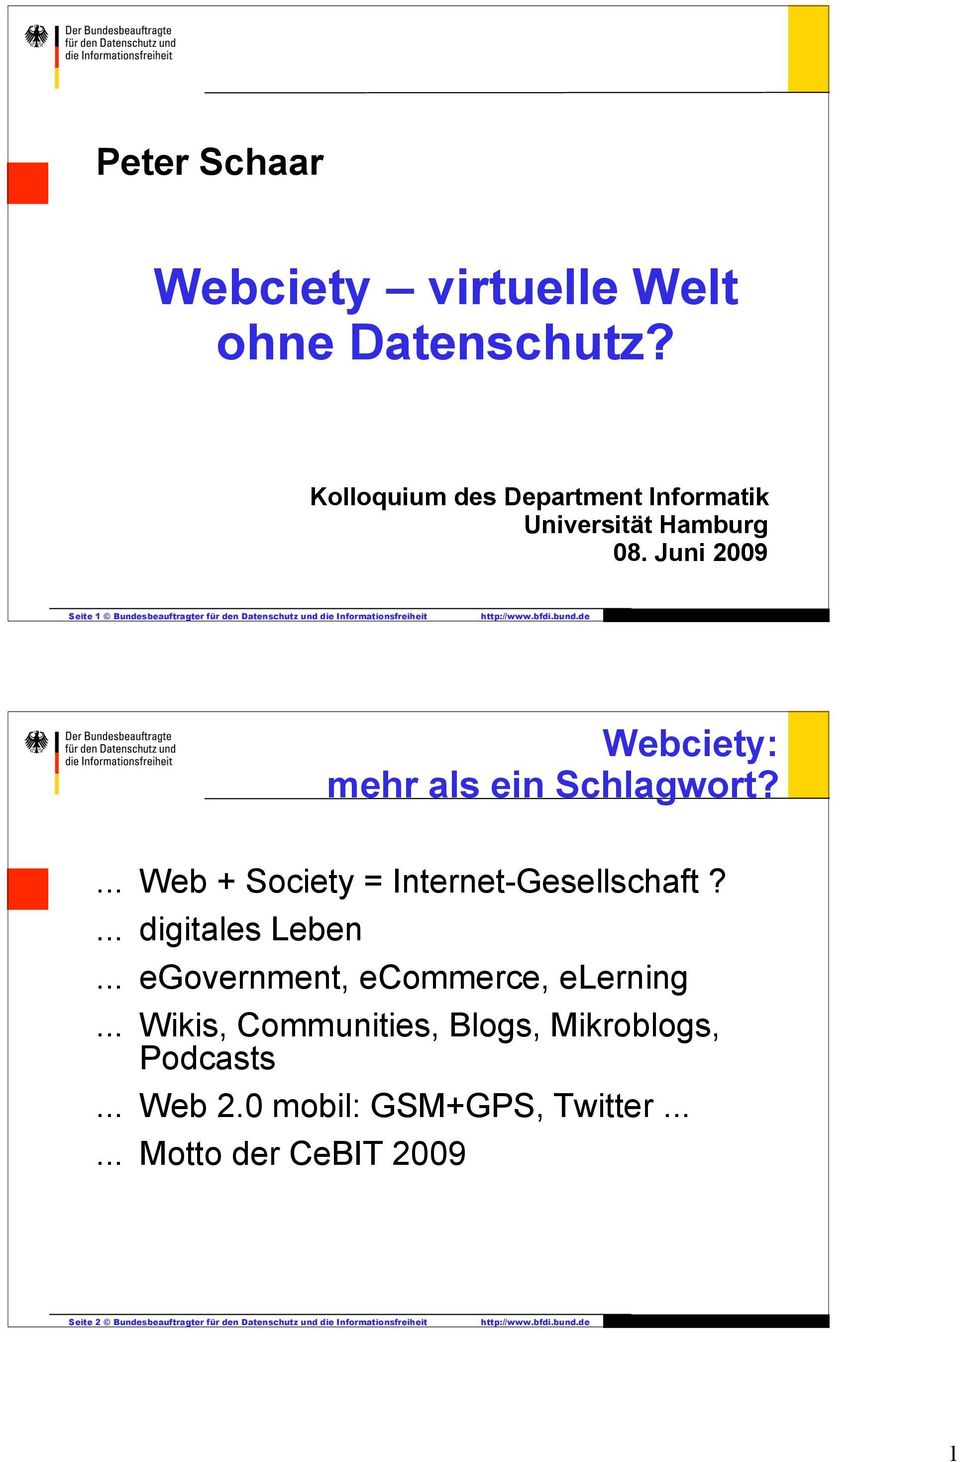 ... Web + Society = Internet-Gesellschaft?... digitales Leben... egovernment, ecommerce, elerning.